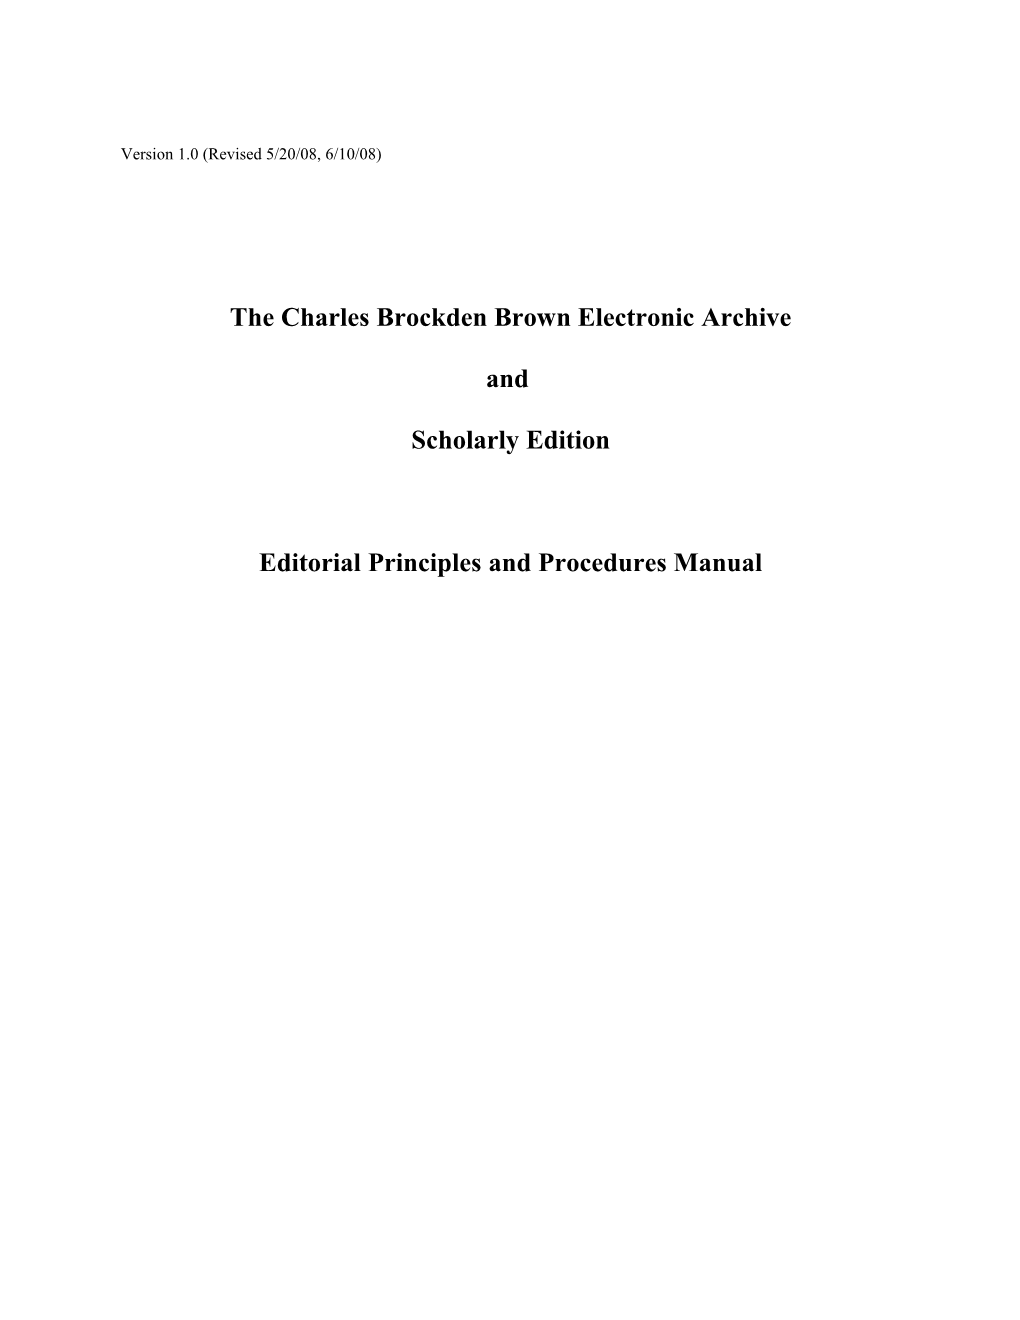 Editorial Principles and Procedures Manual